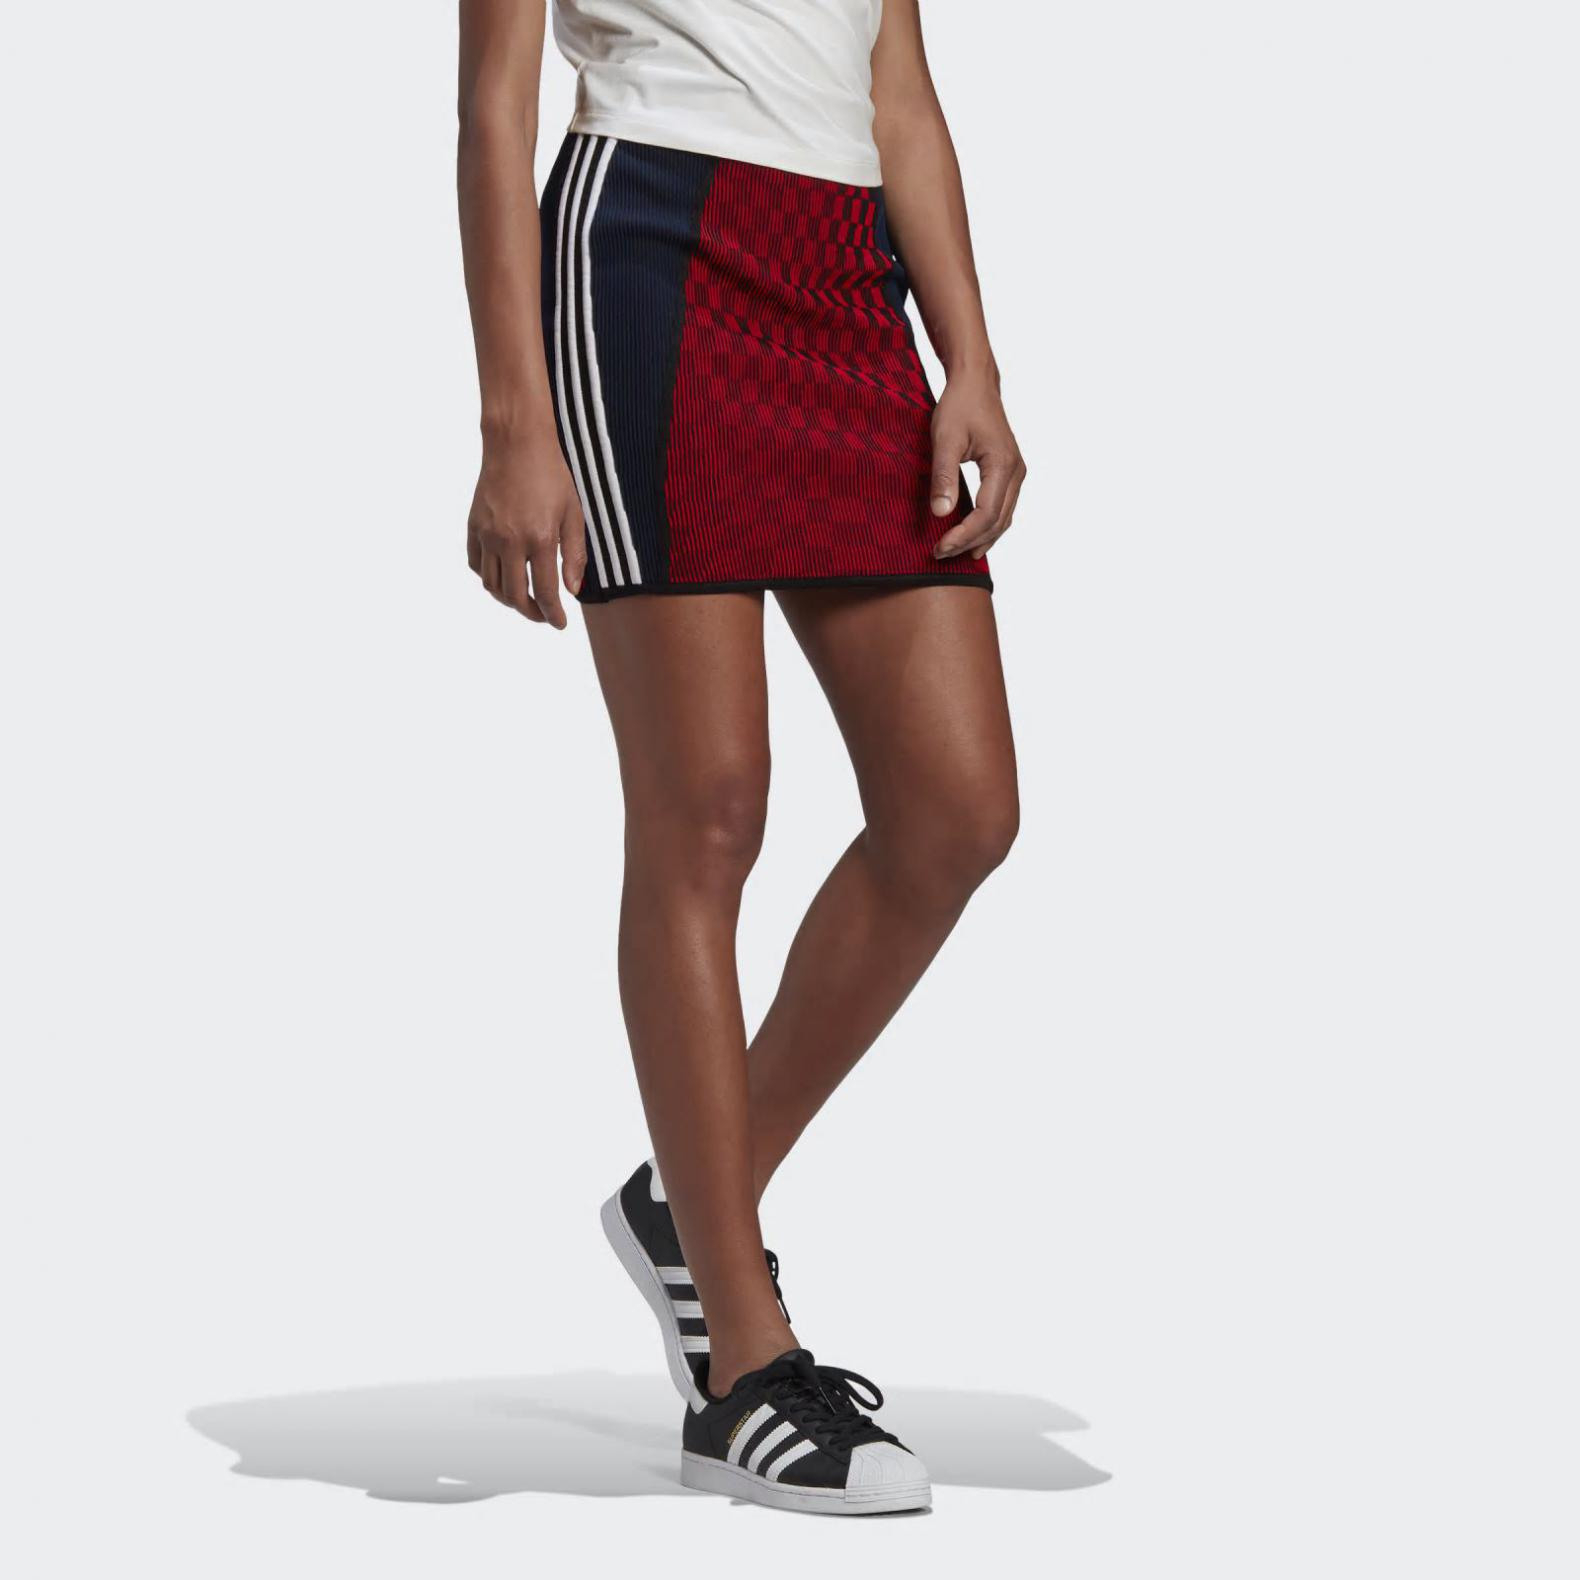 Adidas Originals Röcke  Kleider  Paolina Russo Minirock